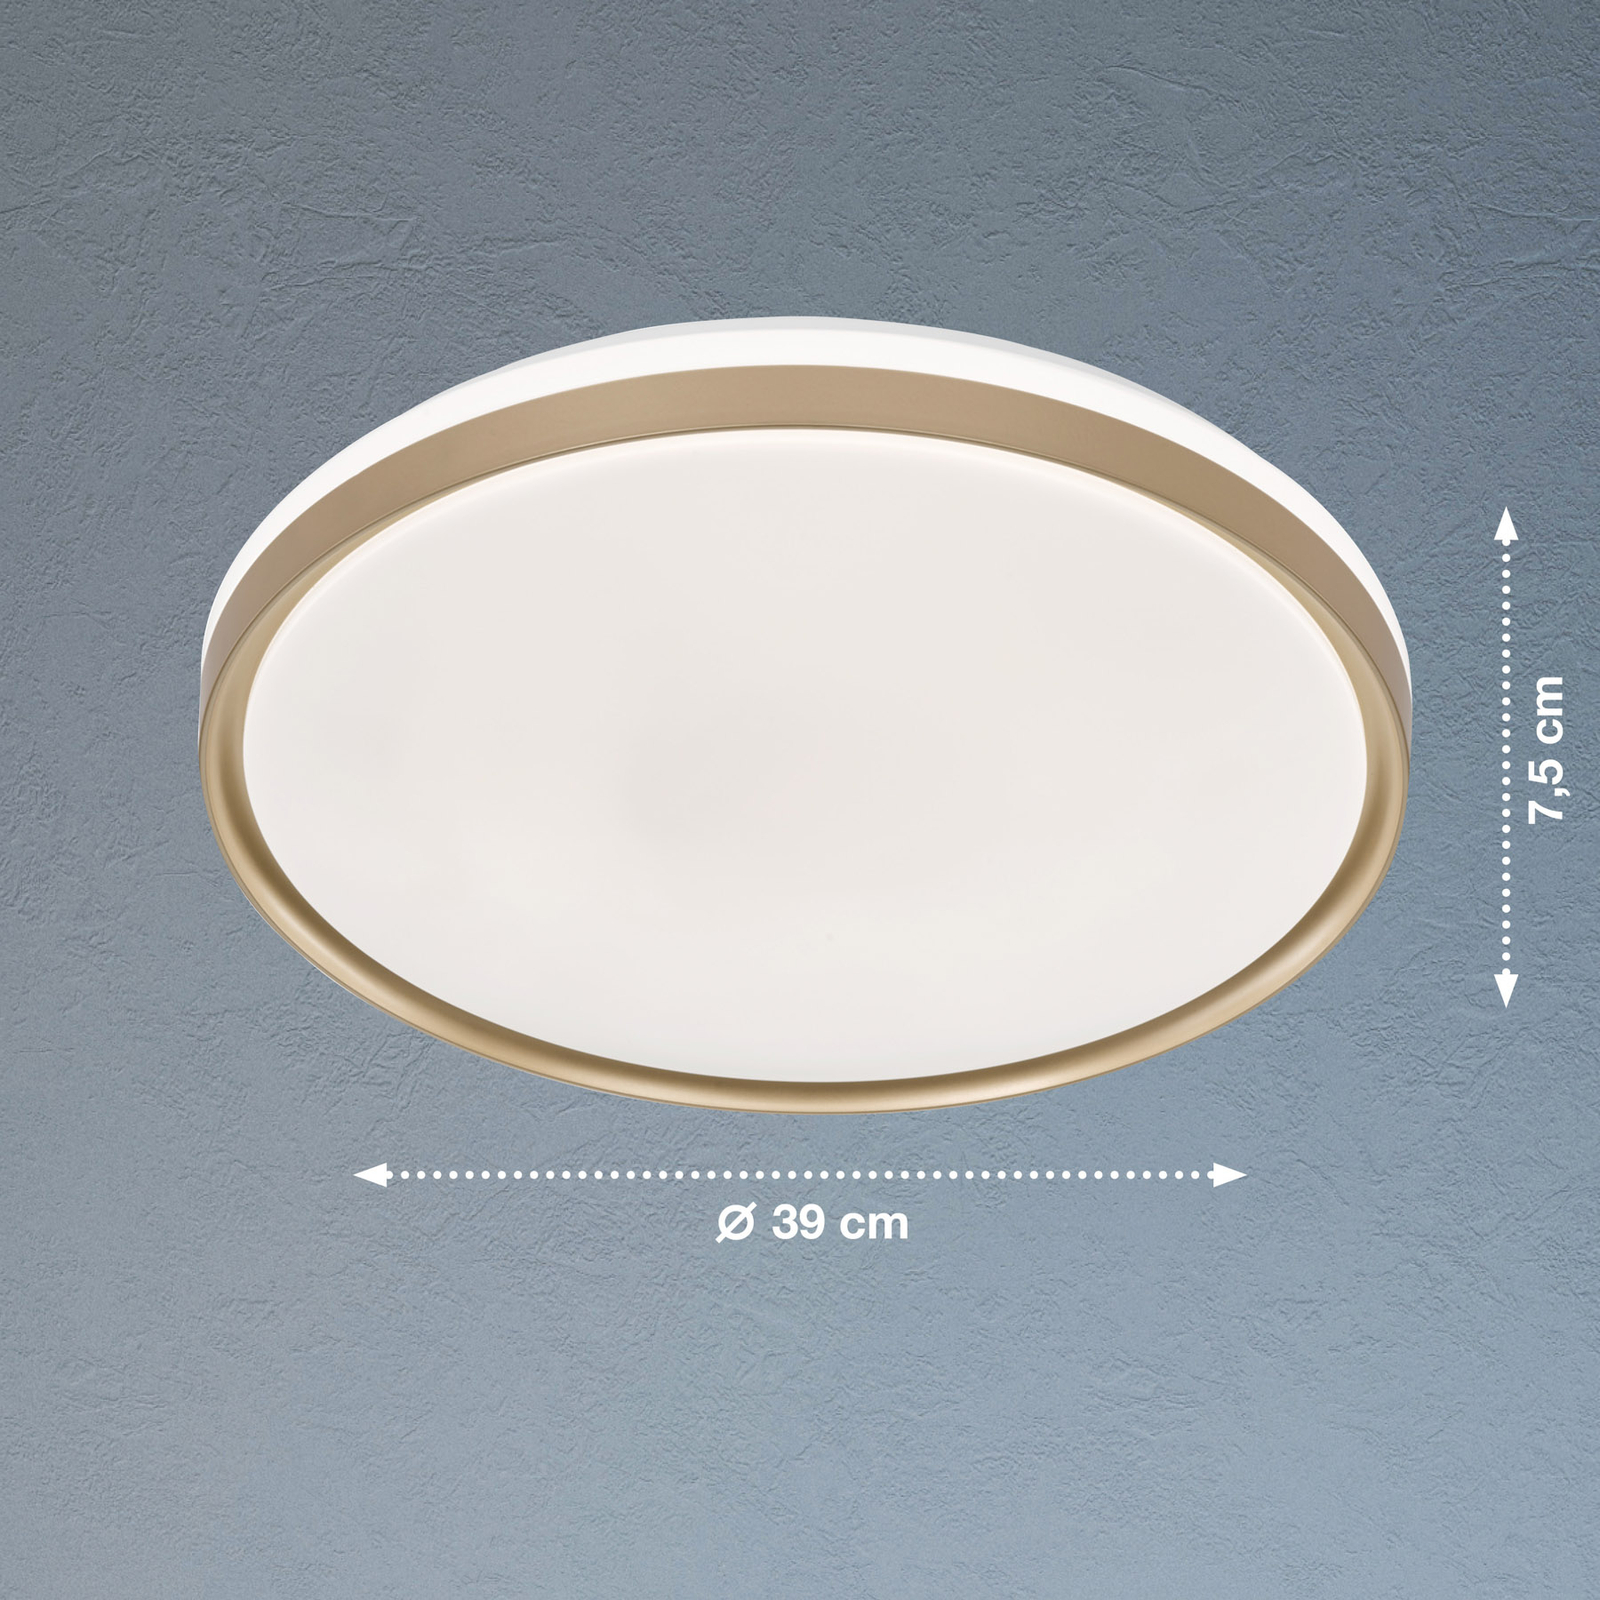 Jaso BS LED plafondlamp, Ø 39 cm, goud